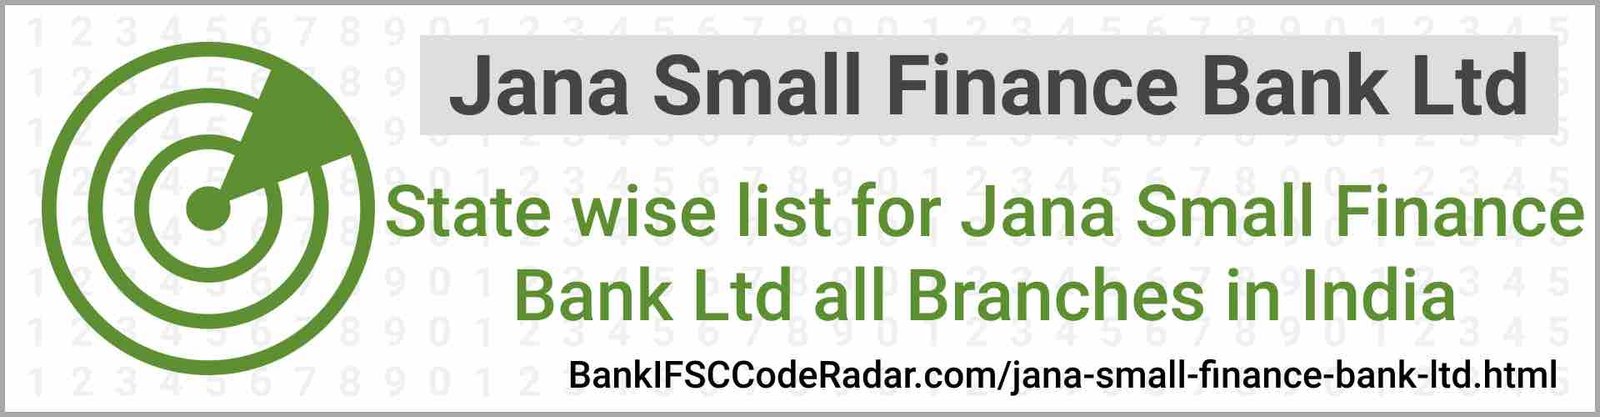 Jana Small Finance Bank Ltd All Branches India